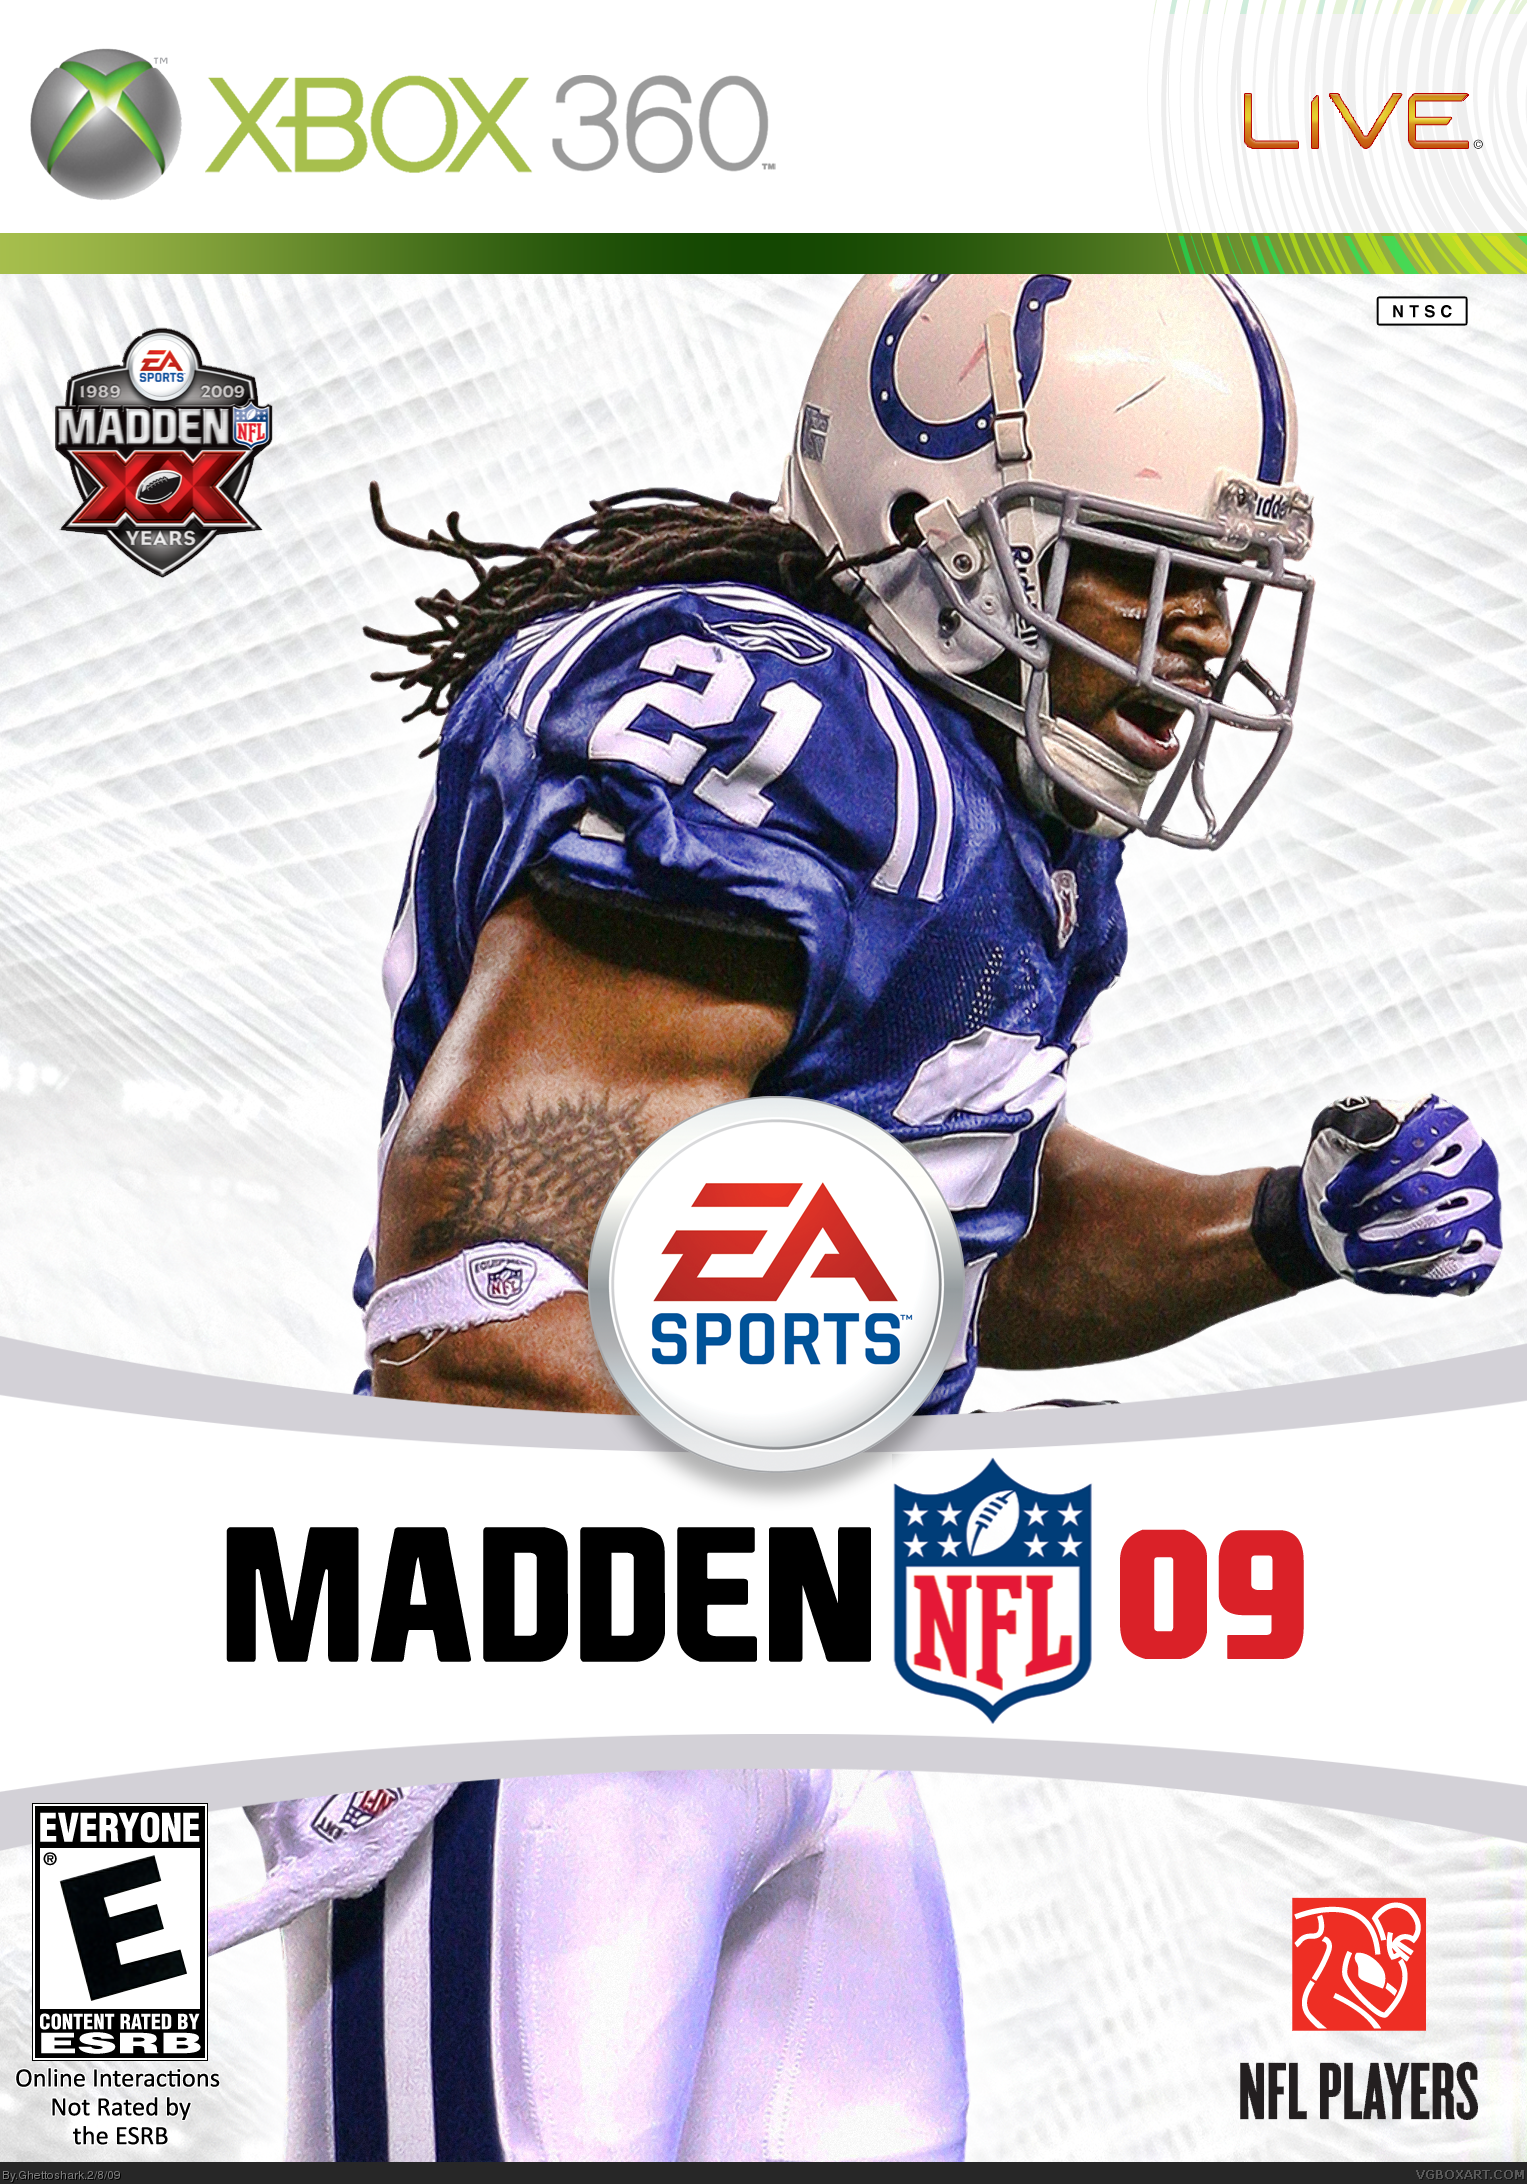 Madden NFL 09 box cover